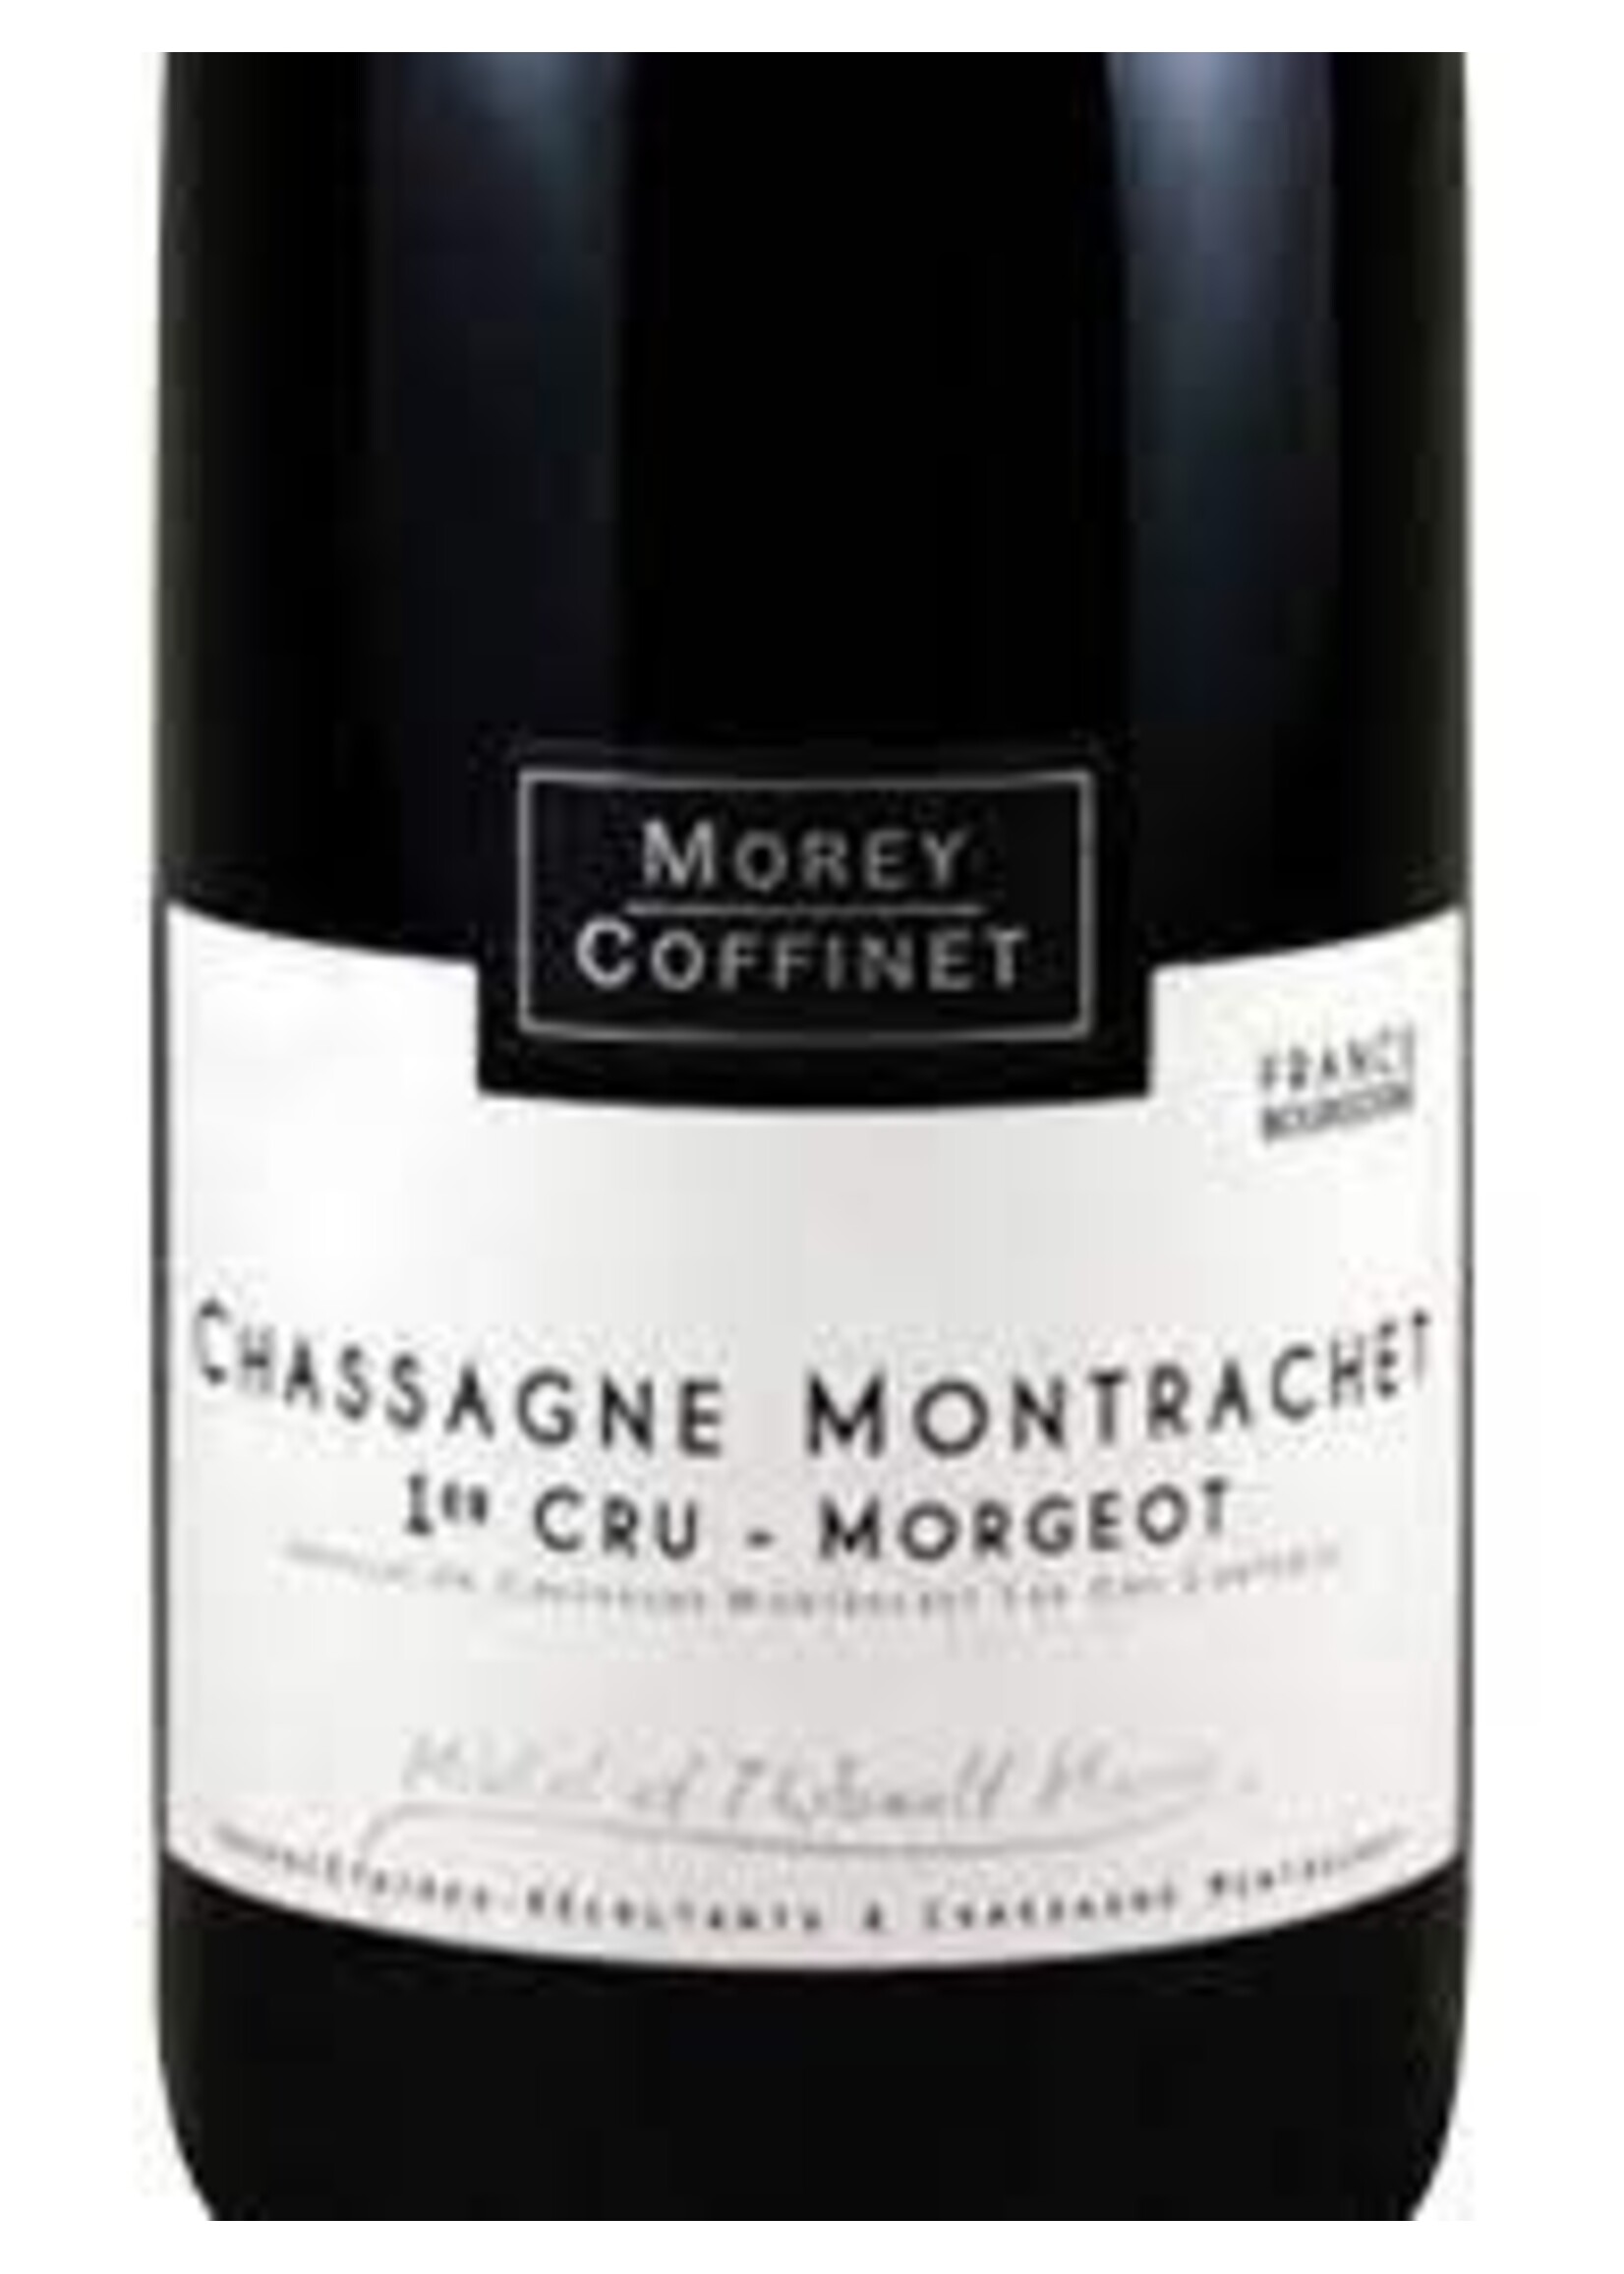 Morey-Coffinet 2021 Chassagne-Montrachet 1er Cru Morgeot Rouge 750ml